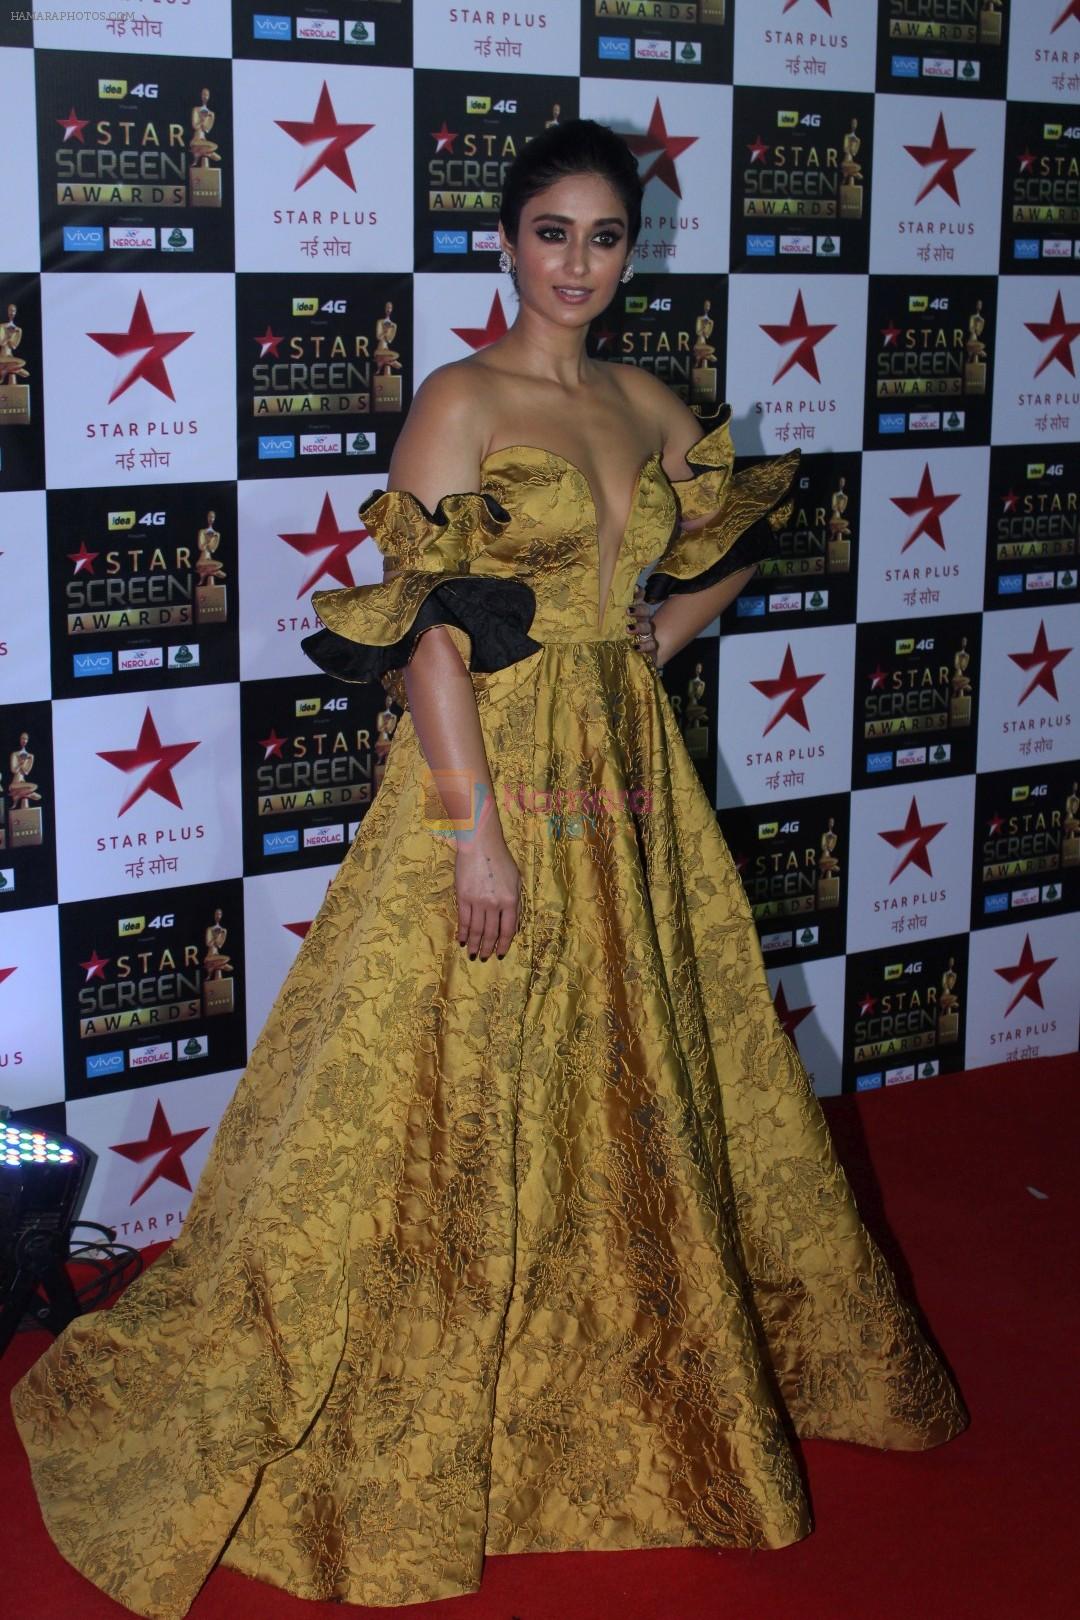 Ileana D'Cruz at the Red Carpet of Star Screen Awards in Mumbai on 3rd Dec 2017